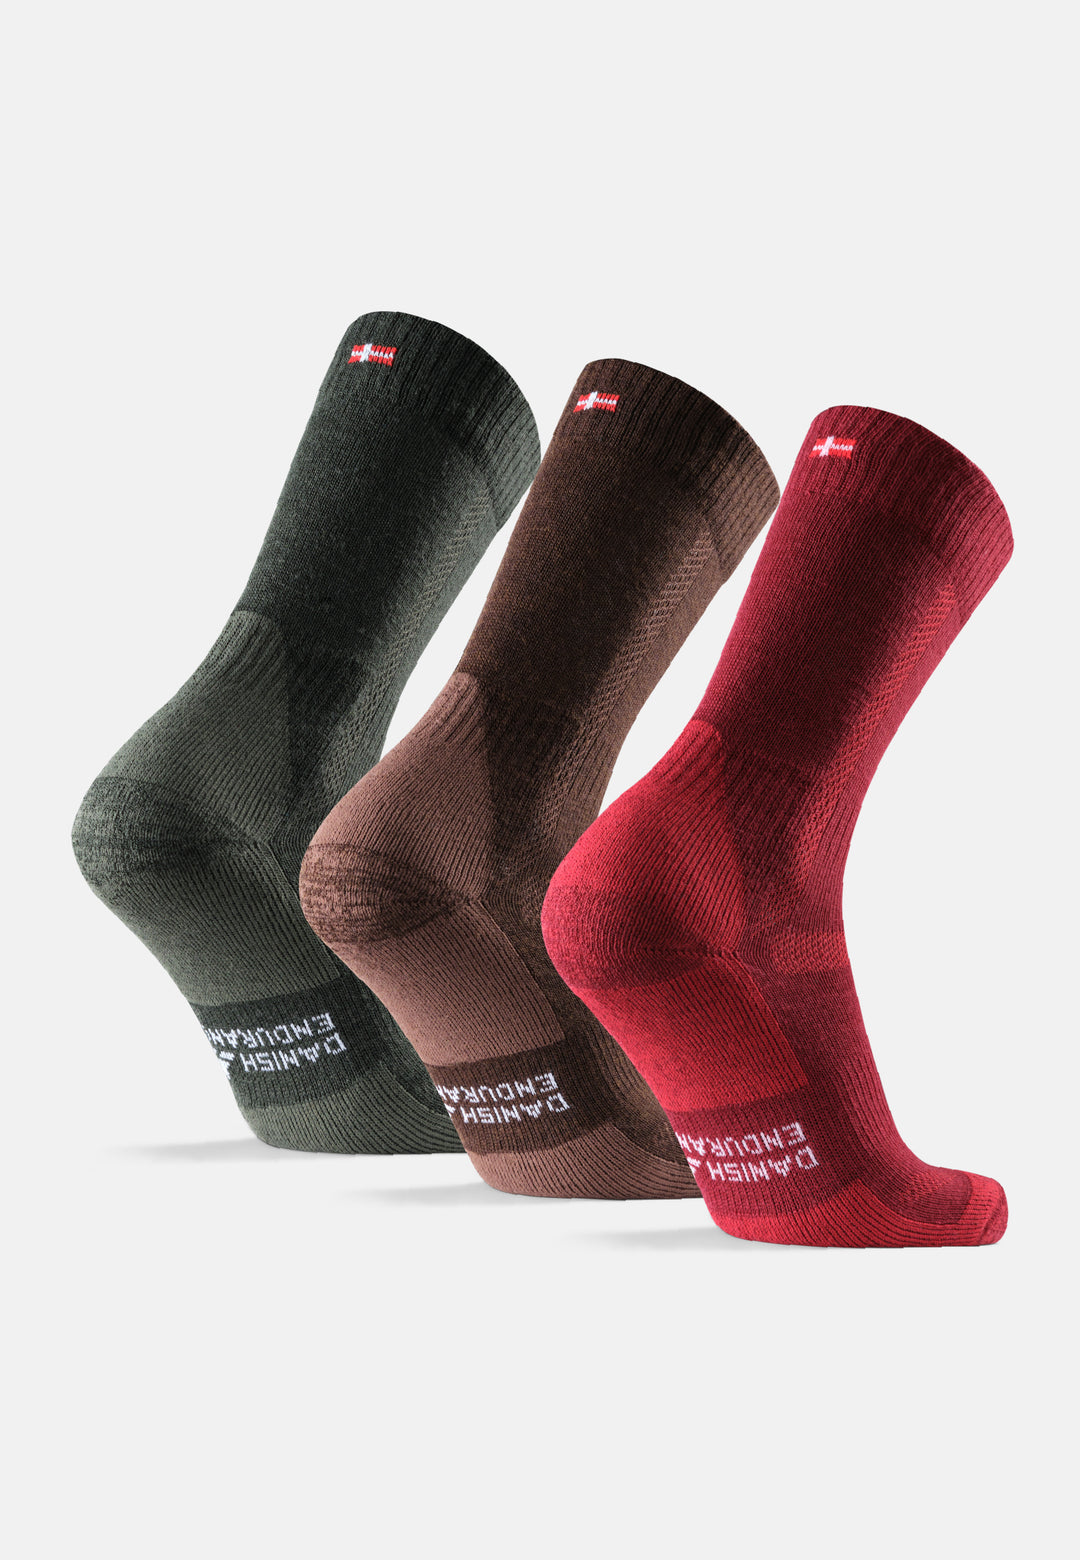 DANISH ENDURANCE Merino Wool Trail Running Socks, Cushioned, Anti-Blister,  Men & Women, 2-Pack, Black/Grey, Medium : : Clothing, Shoes &  Accessories